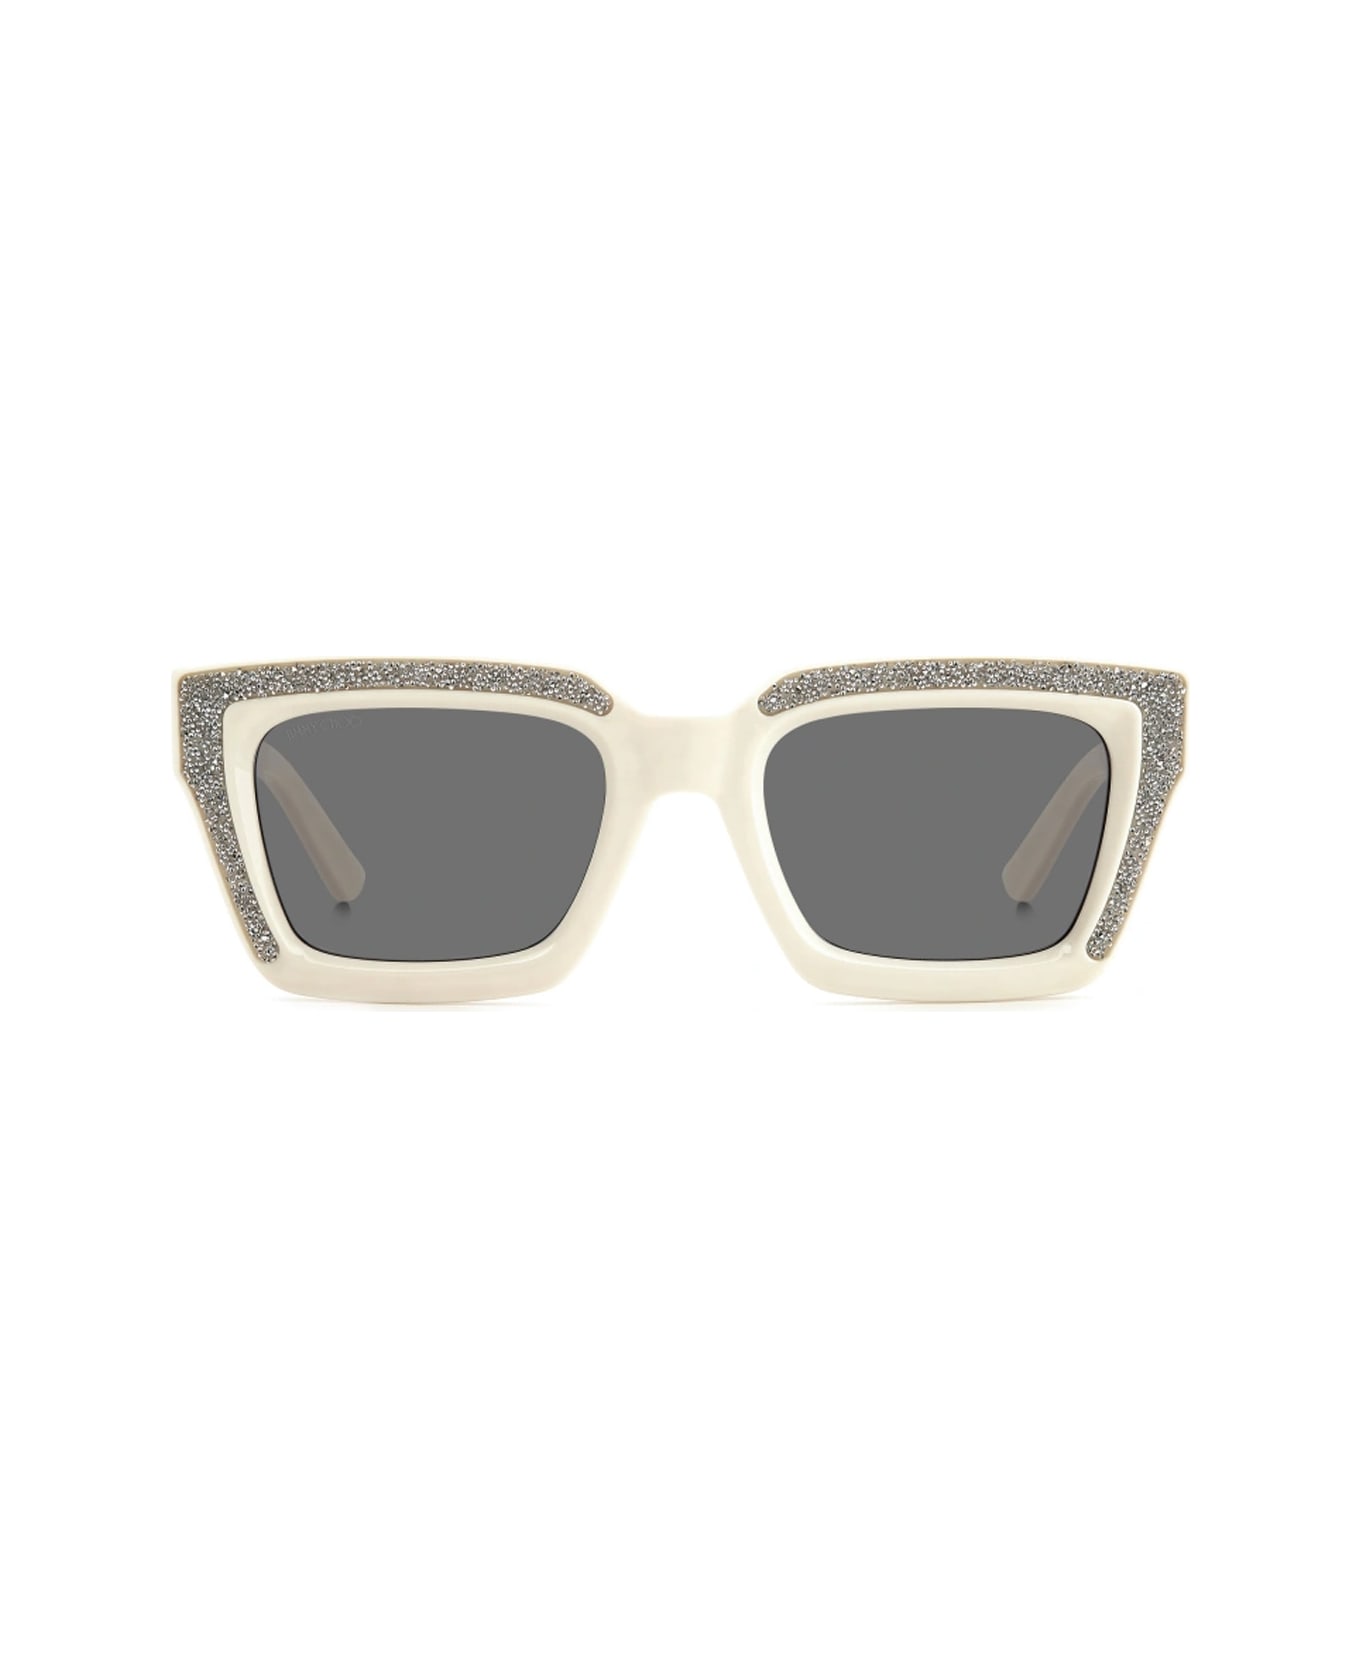 Jimmy Choo Eyewear Megs/s Szj/2k Sunglasses - Avorio サングラス